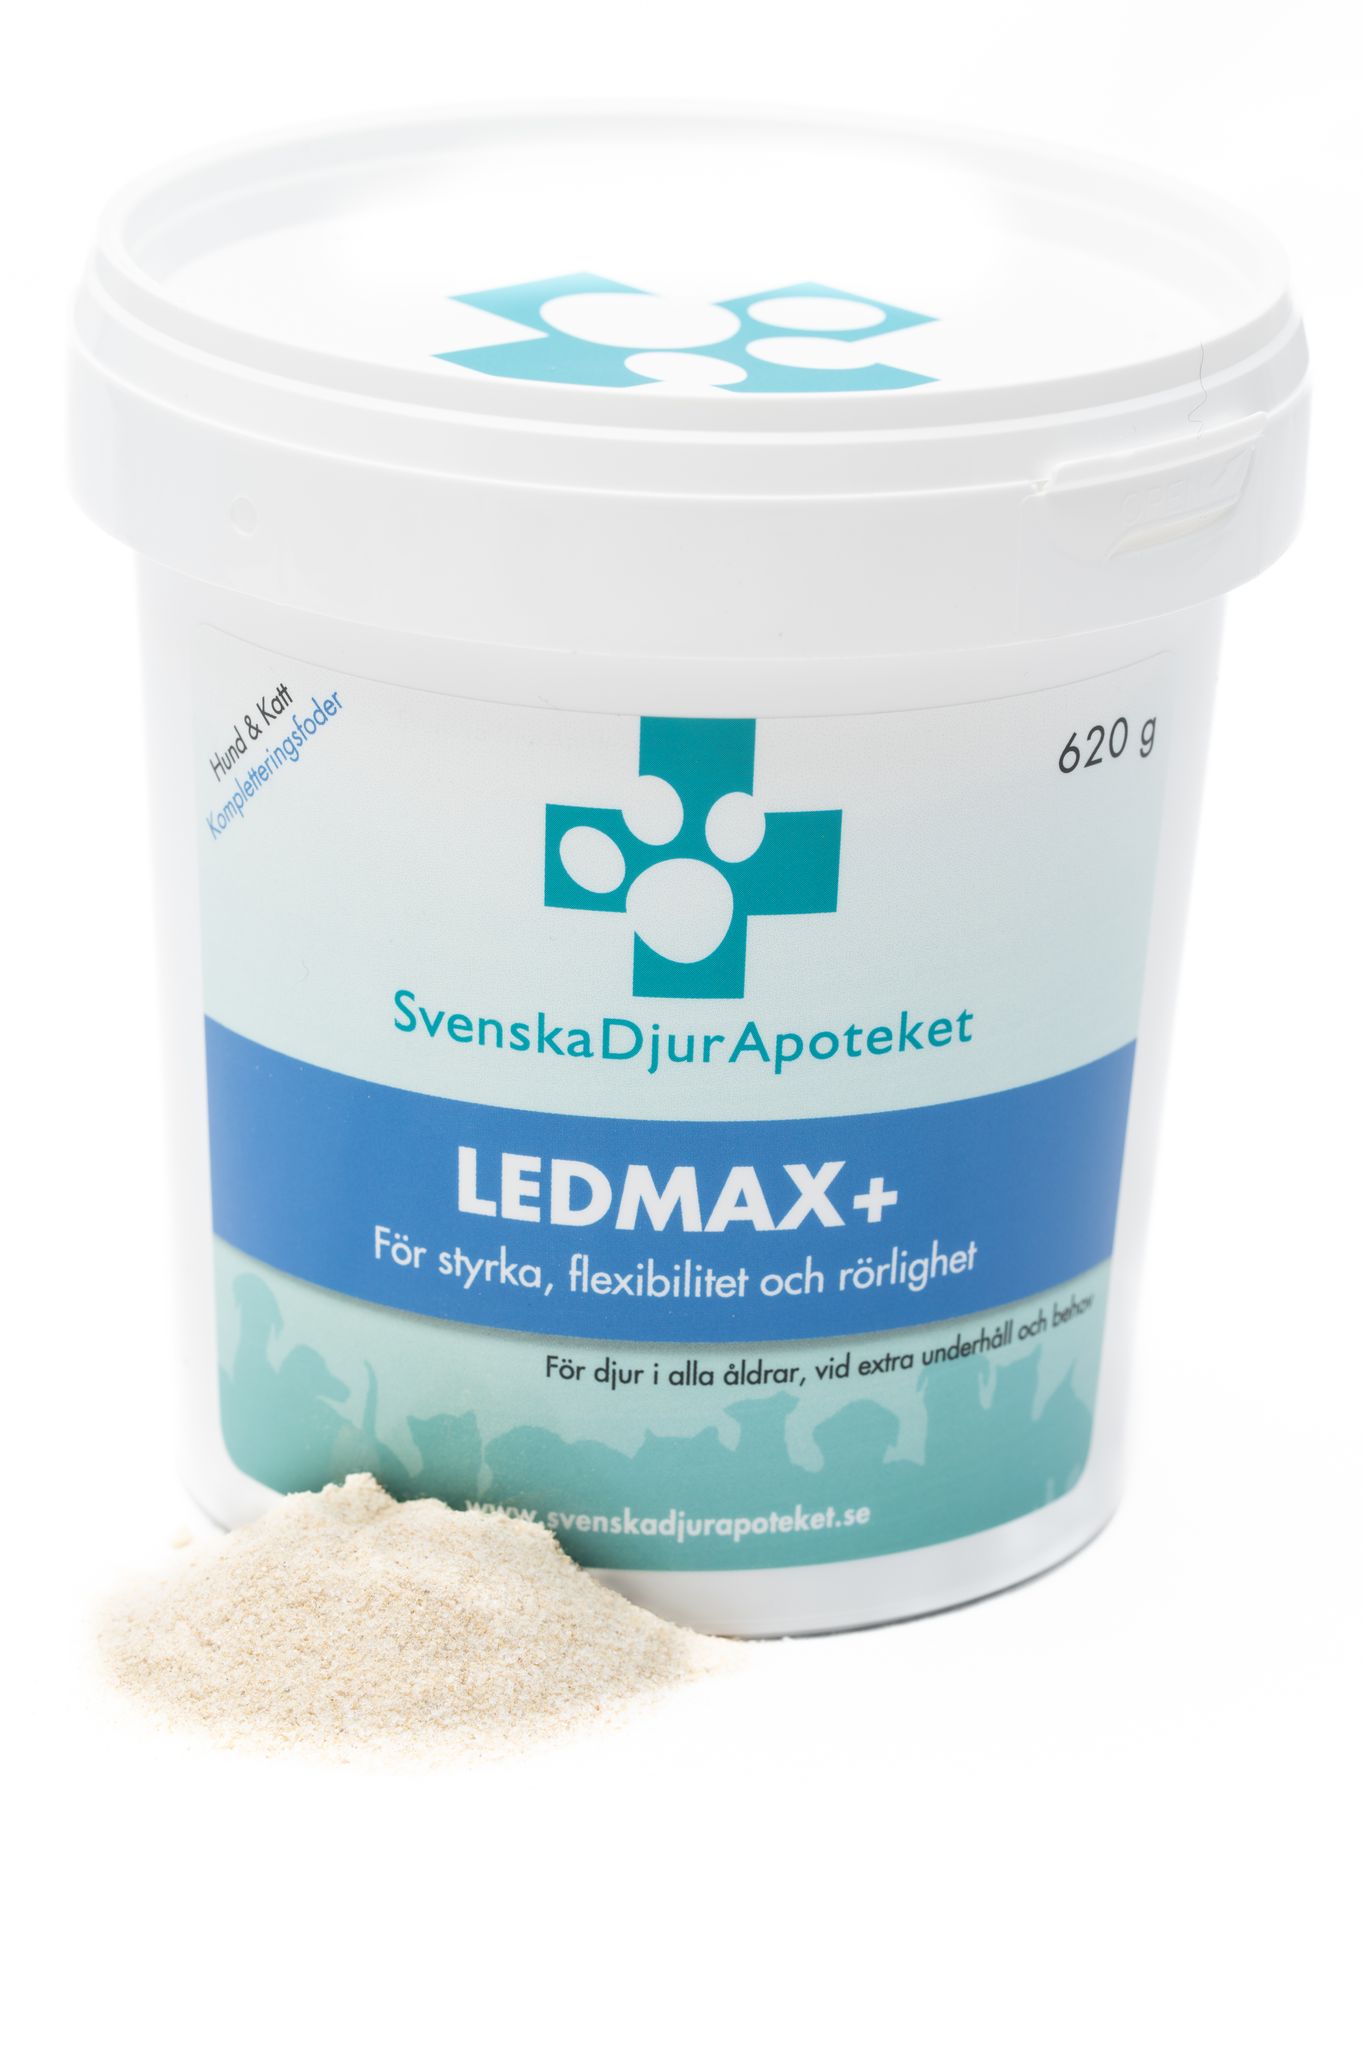 Svenska DjurApoteket LedMax + 620 g